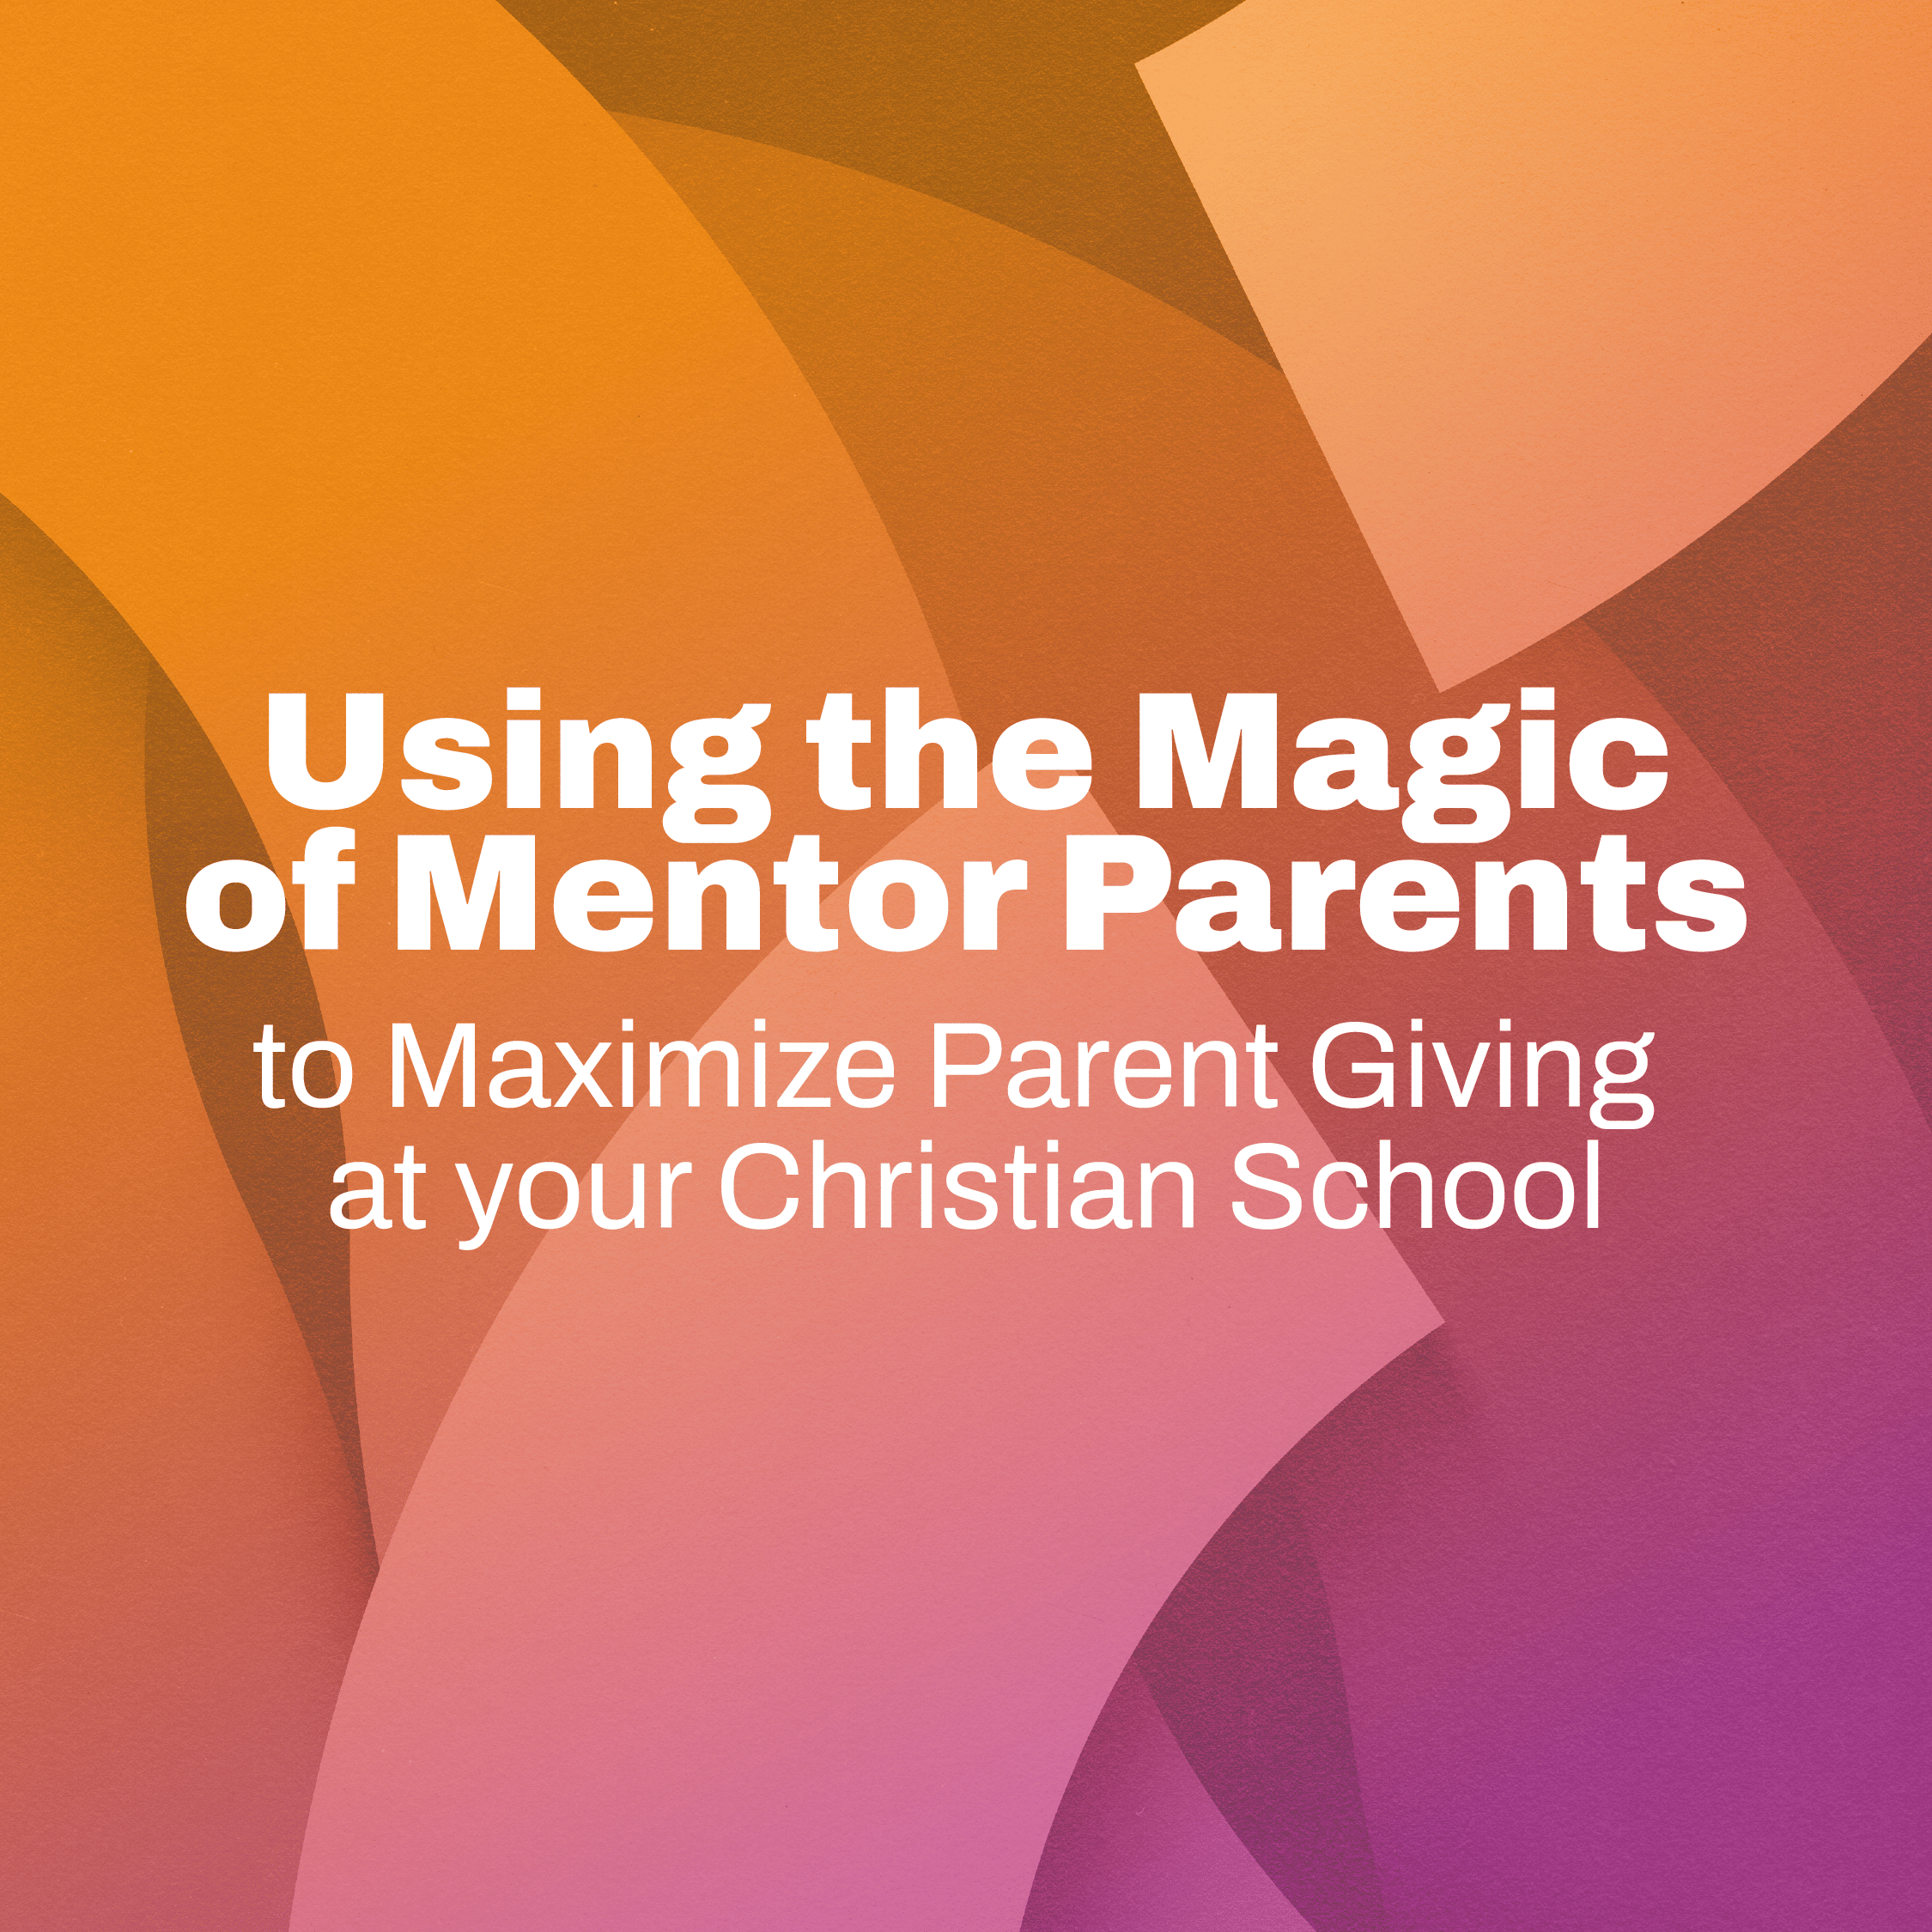 The Magic of Mentor Parents